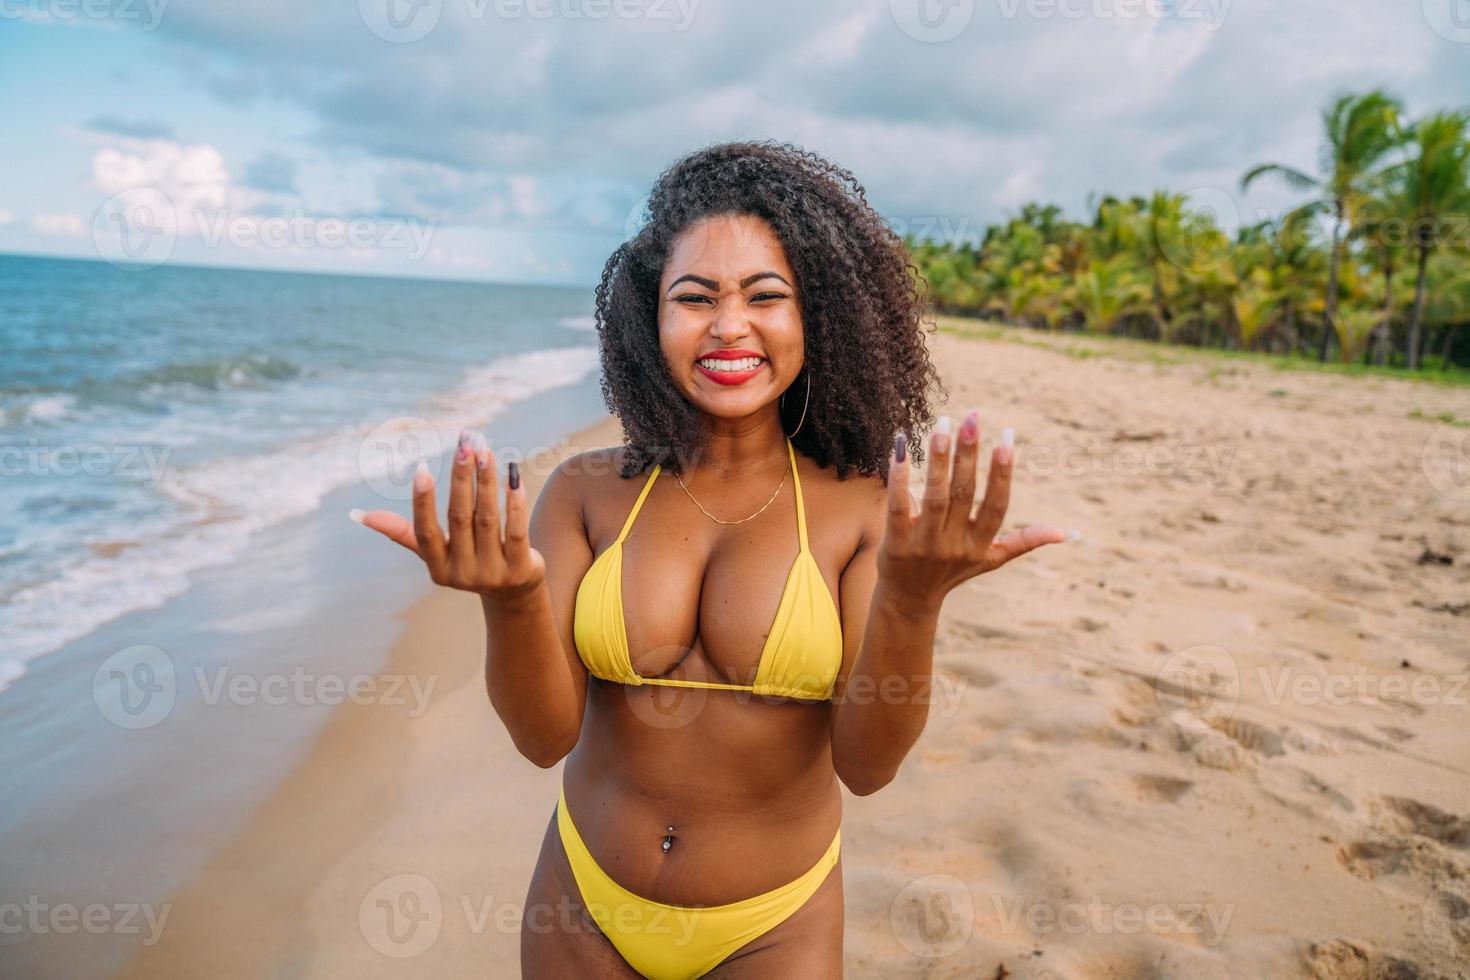 amanda peneder dempsey recommends Women On Beach In Bikini